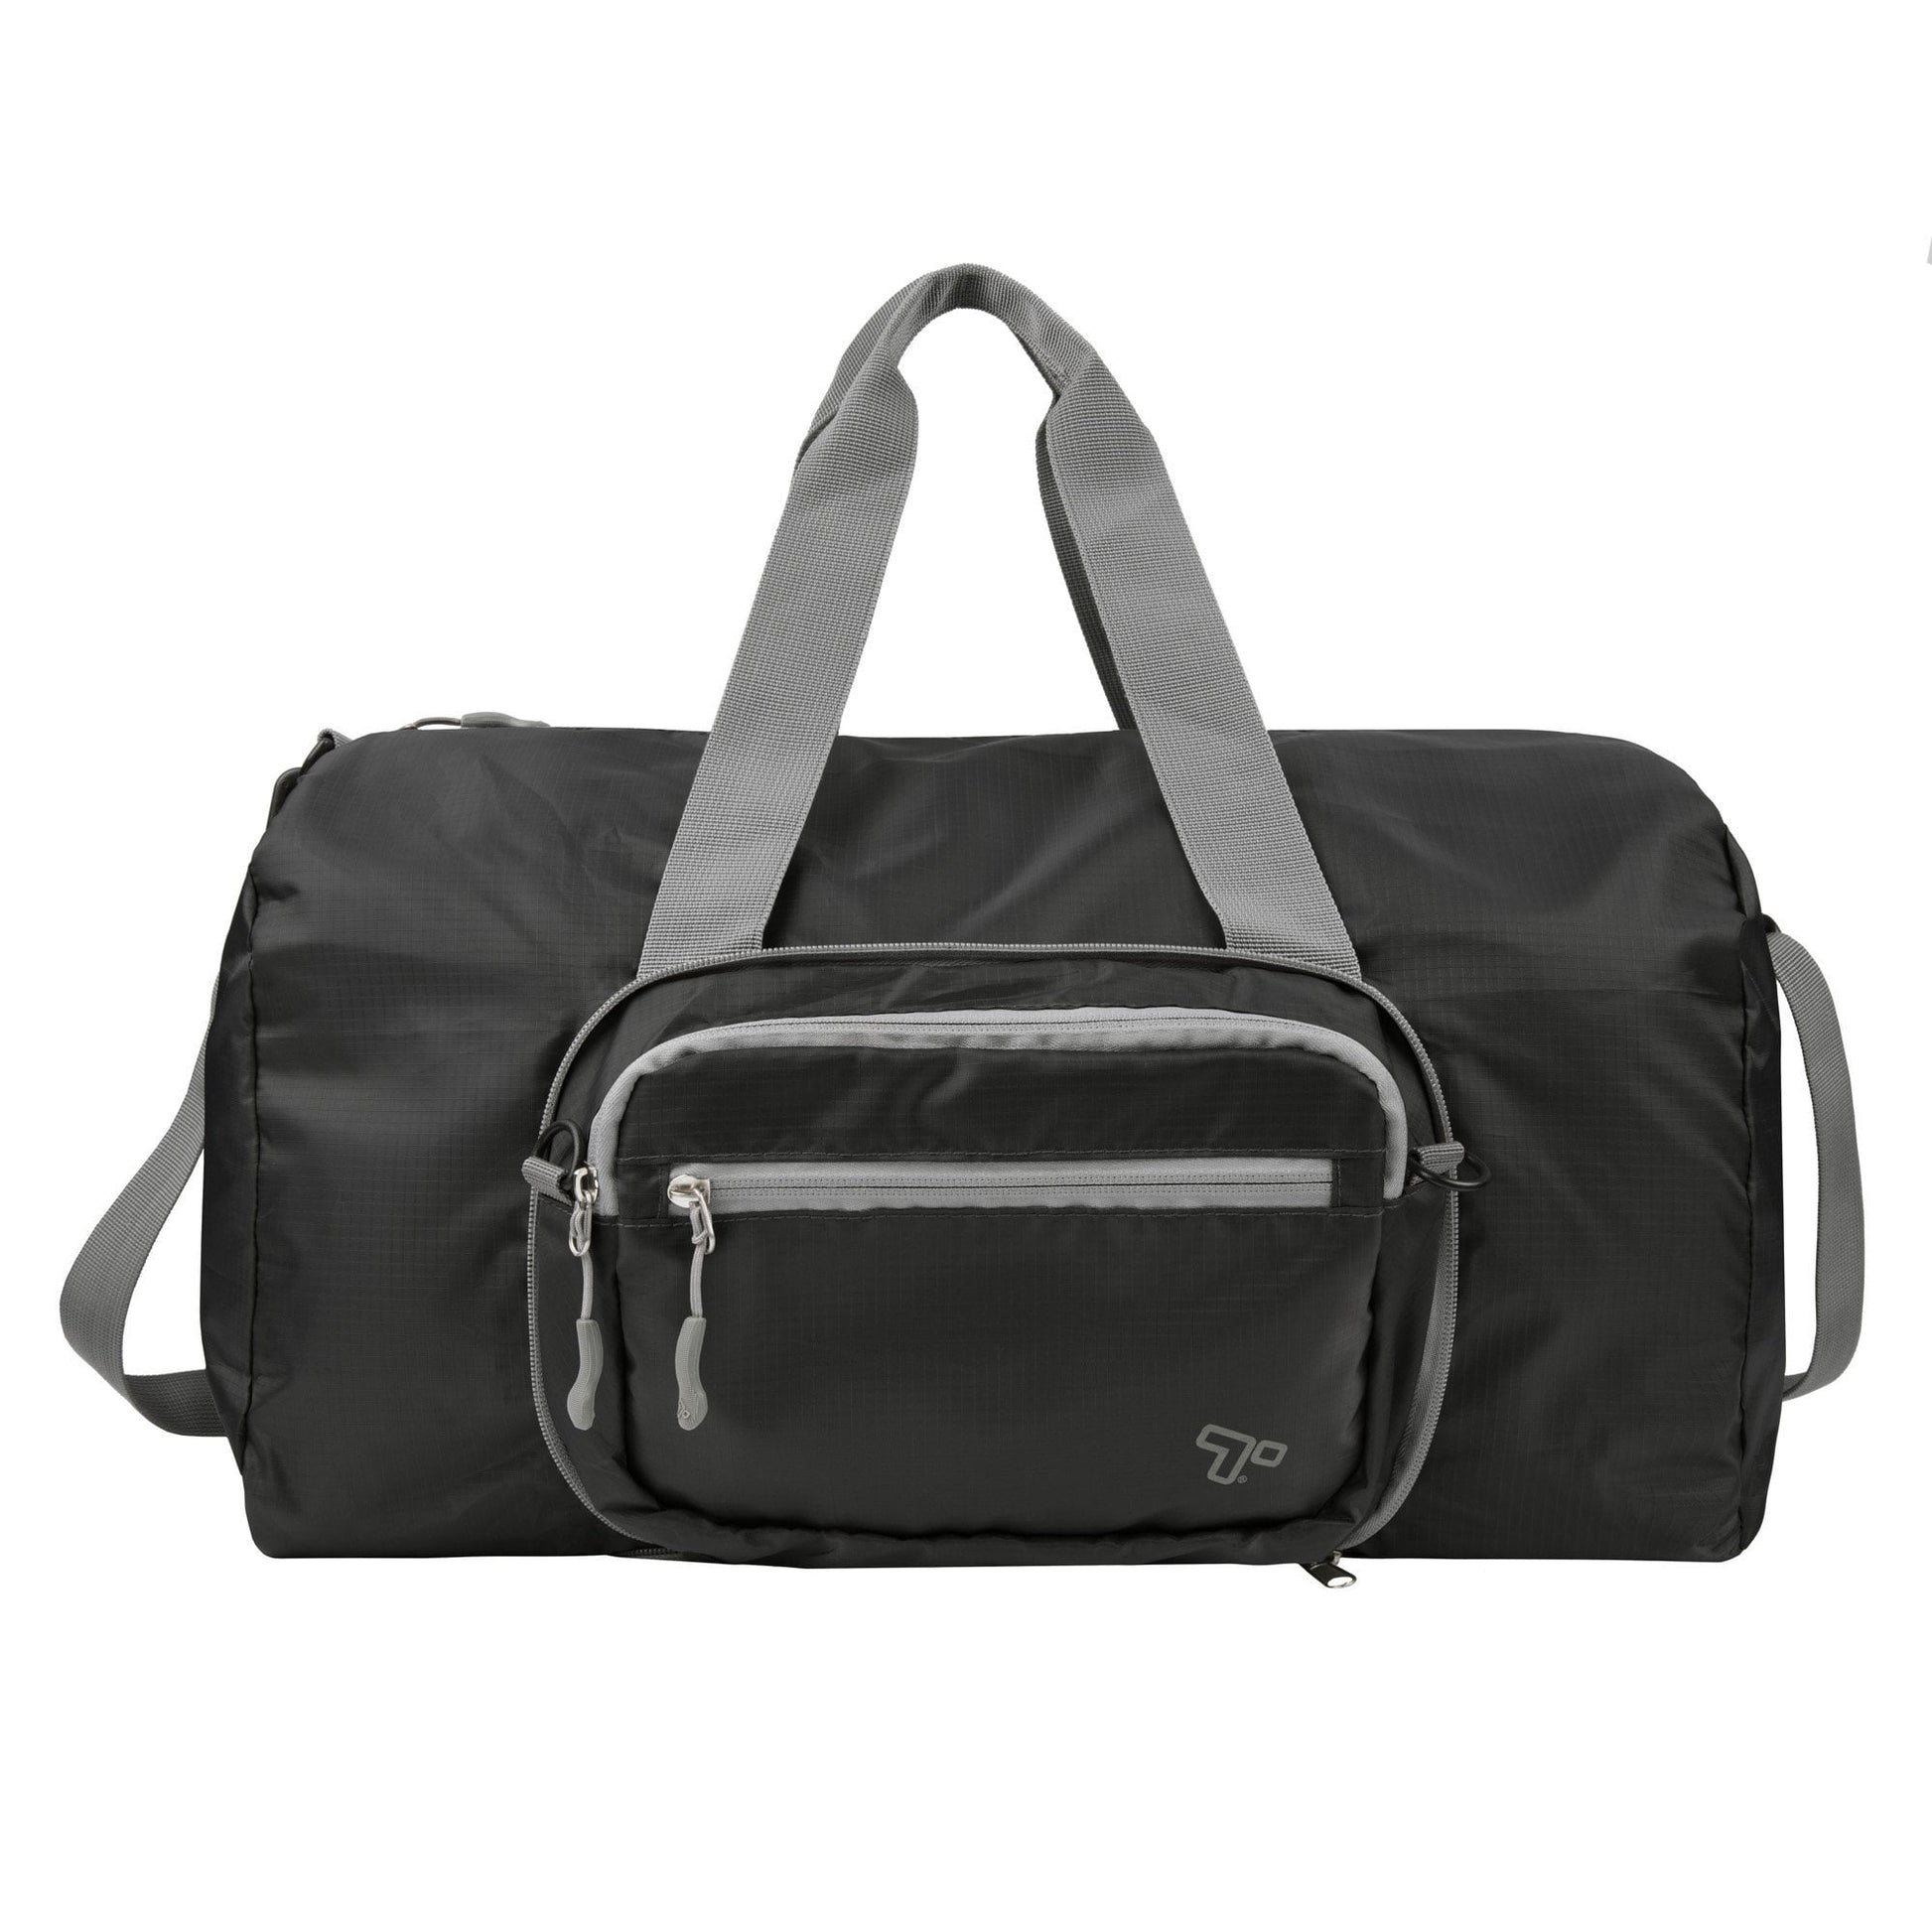 Travelon 2-in-1 Convertible Crossbody Duffel Bag - Black